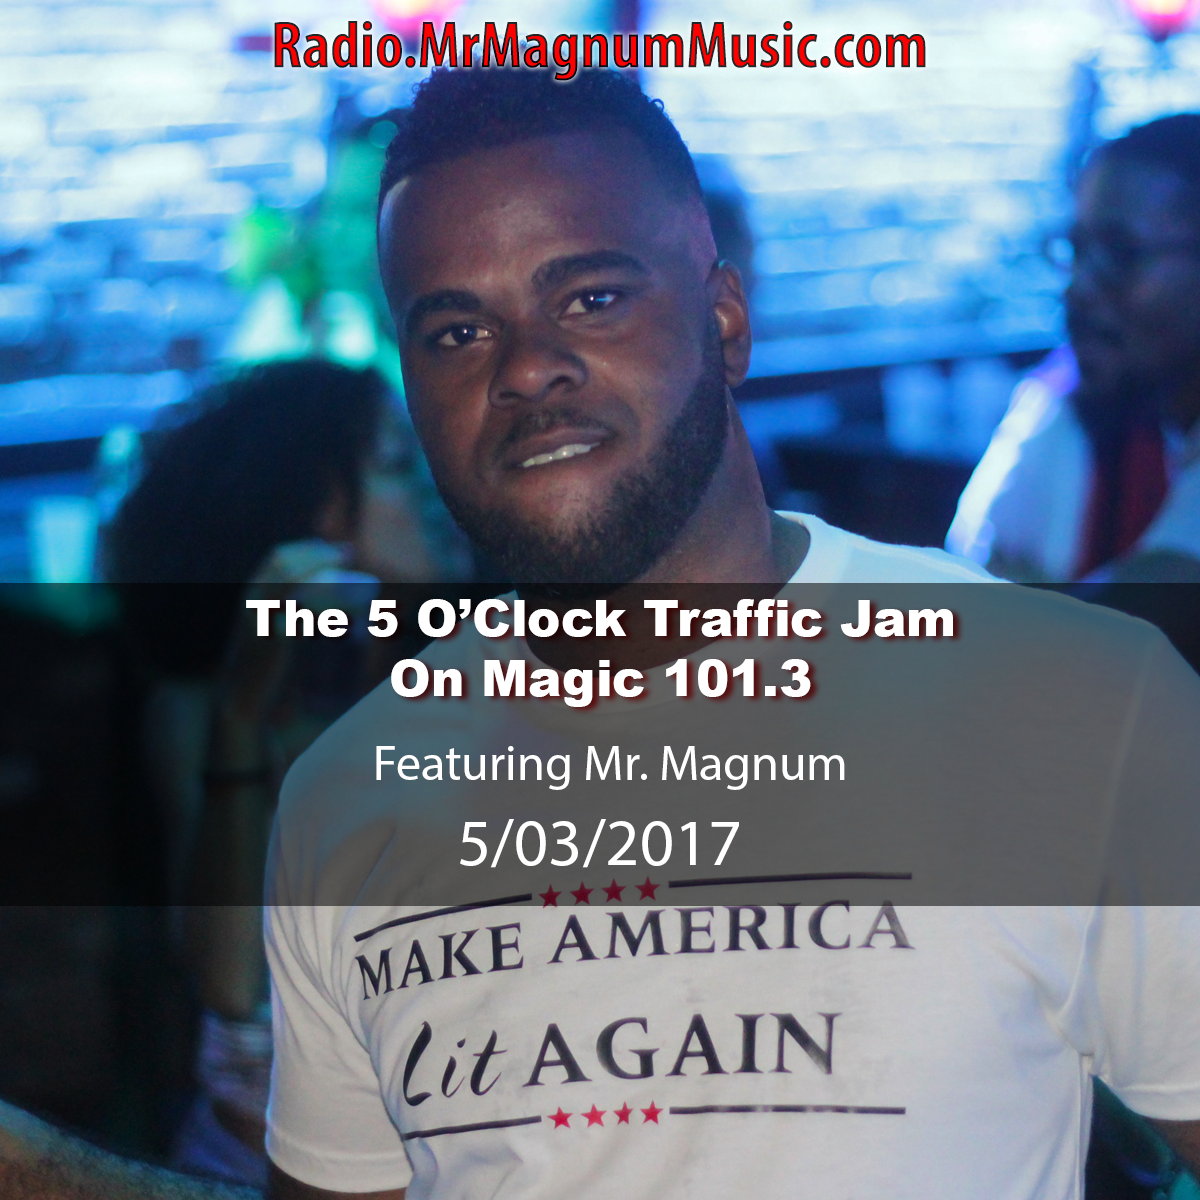 The 5 O'Clock Traffic Jam 20170503 featuring Gainesville's #1 DJ, Mr. Magnum on Magic 101.3